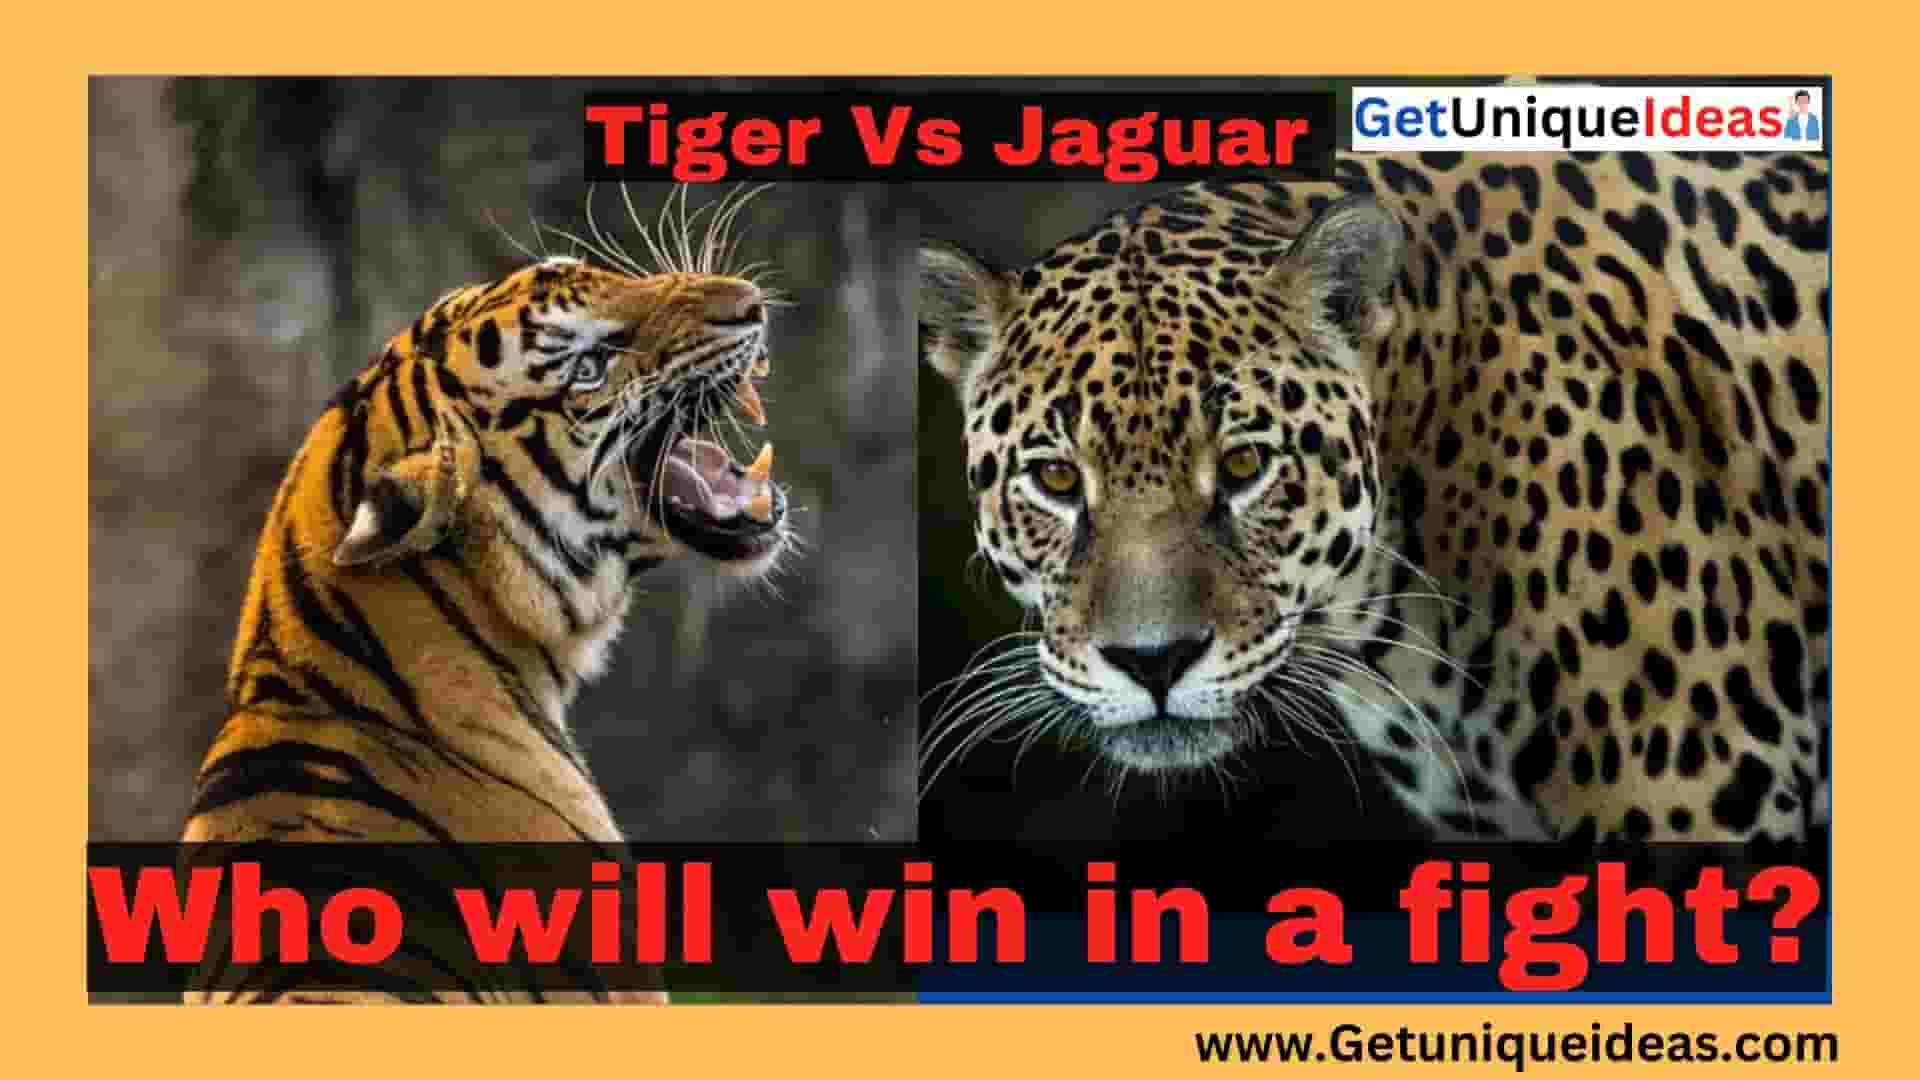 Tiger Vs. Jaguar: Who will win in a fight?